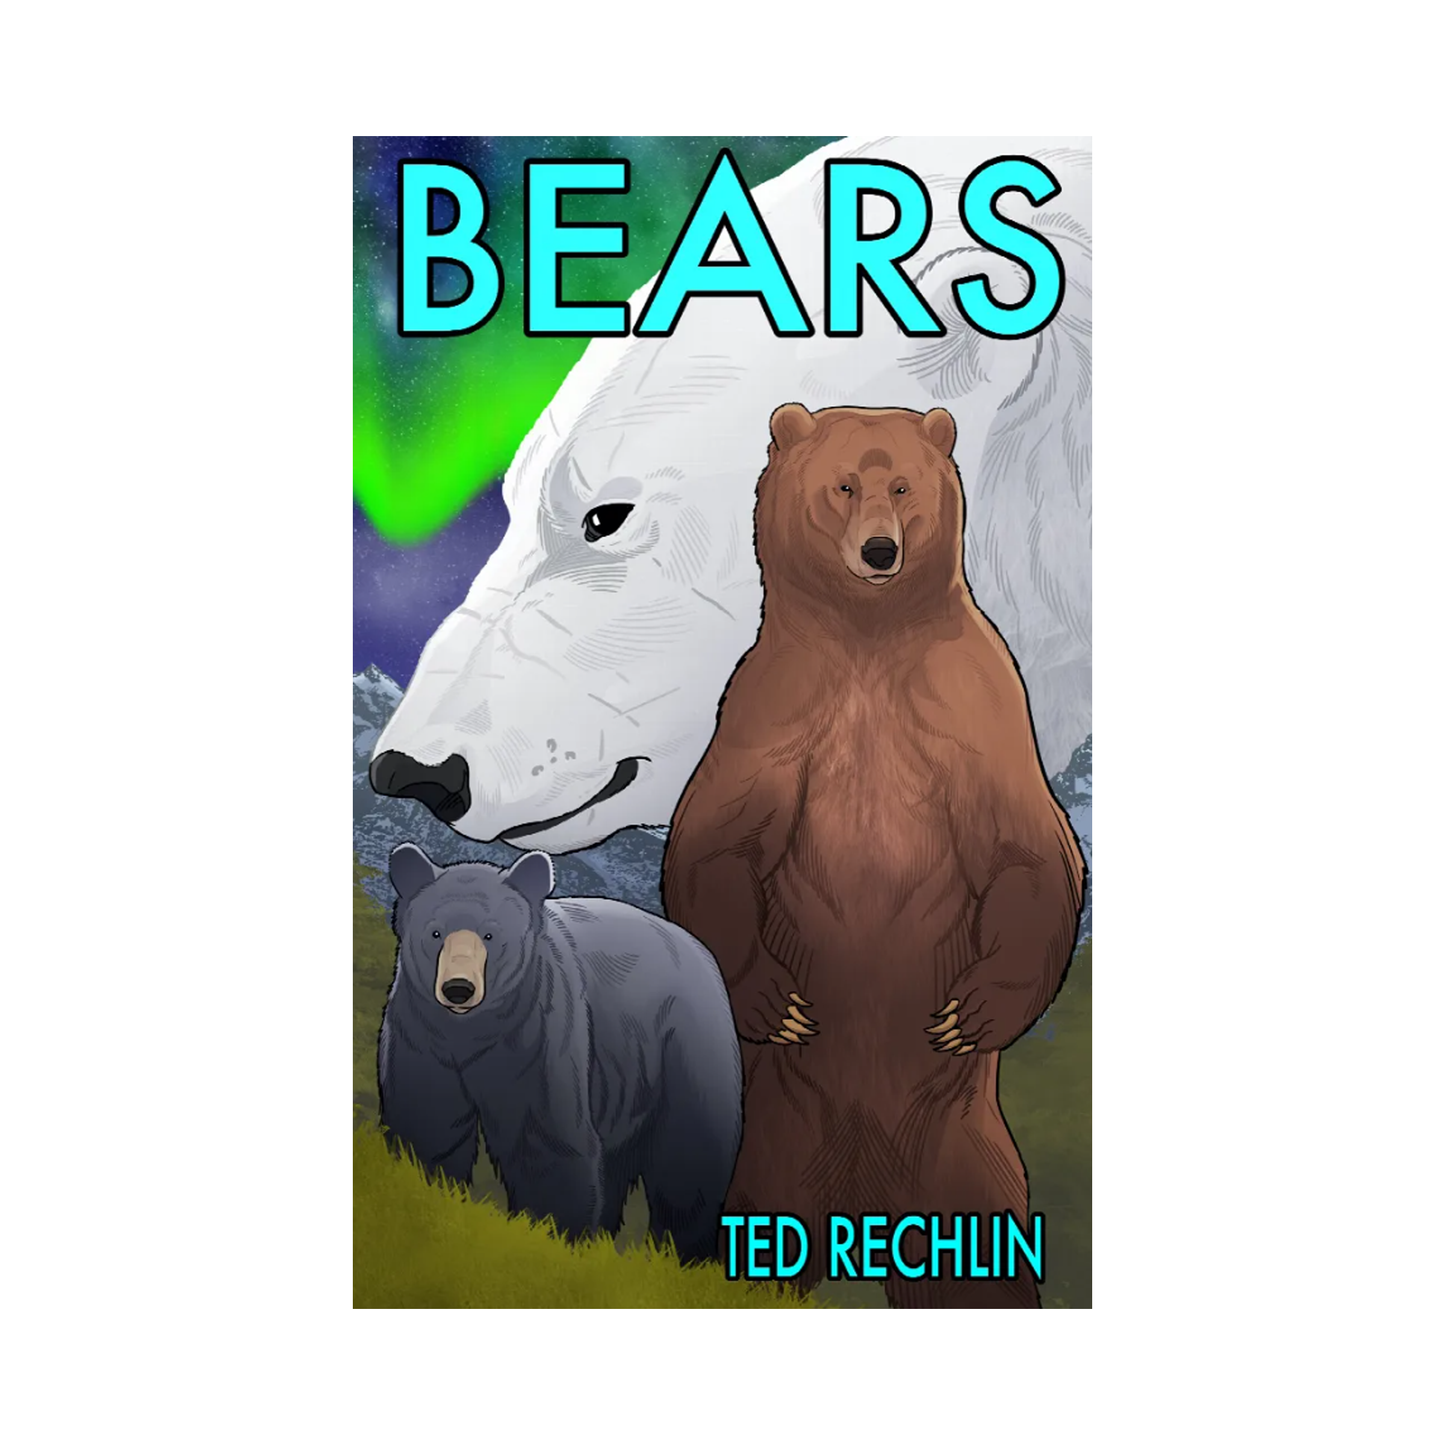 Bears: A Graphic Novel